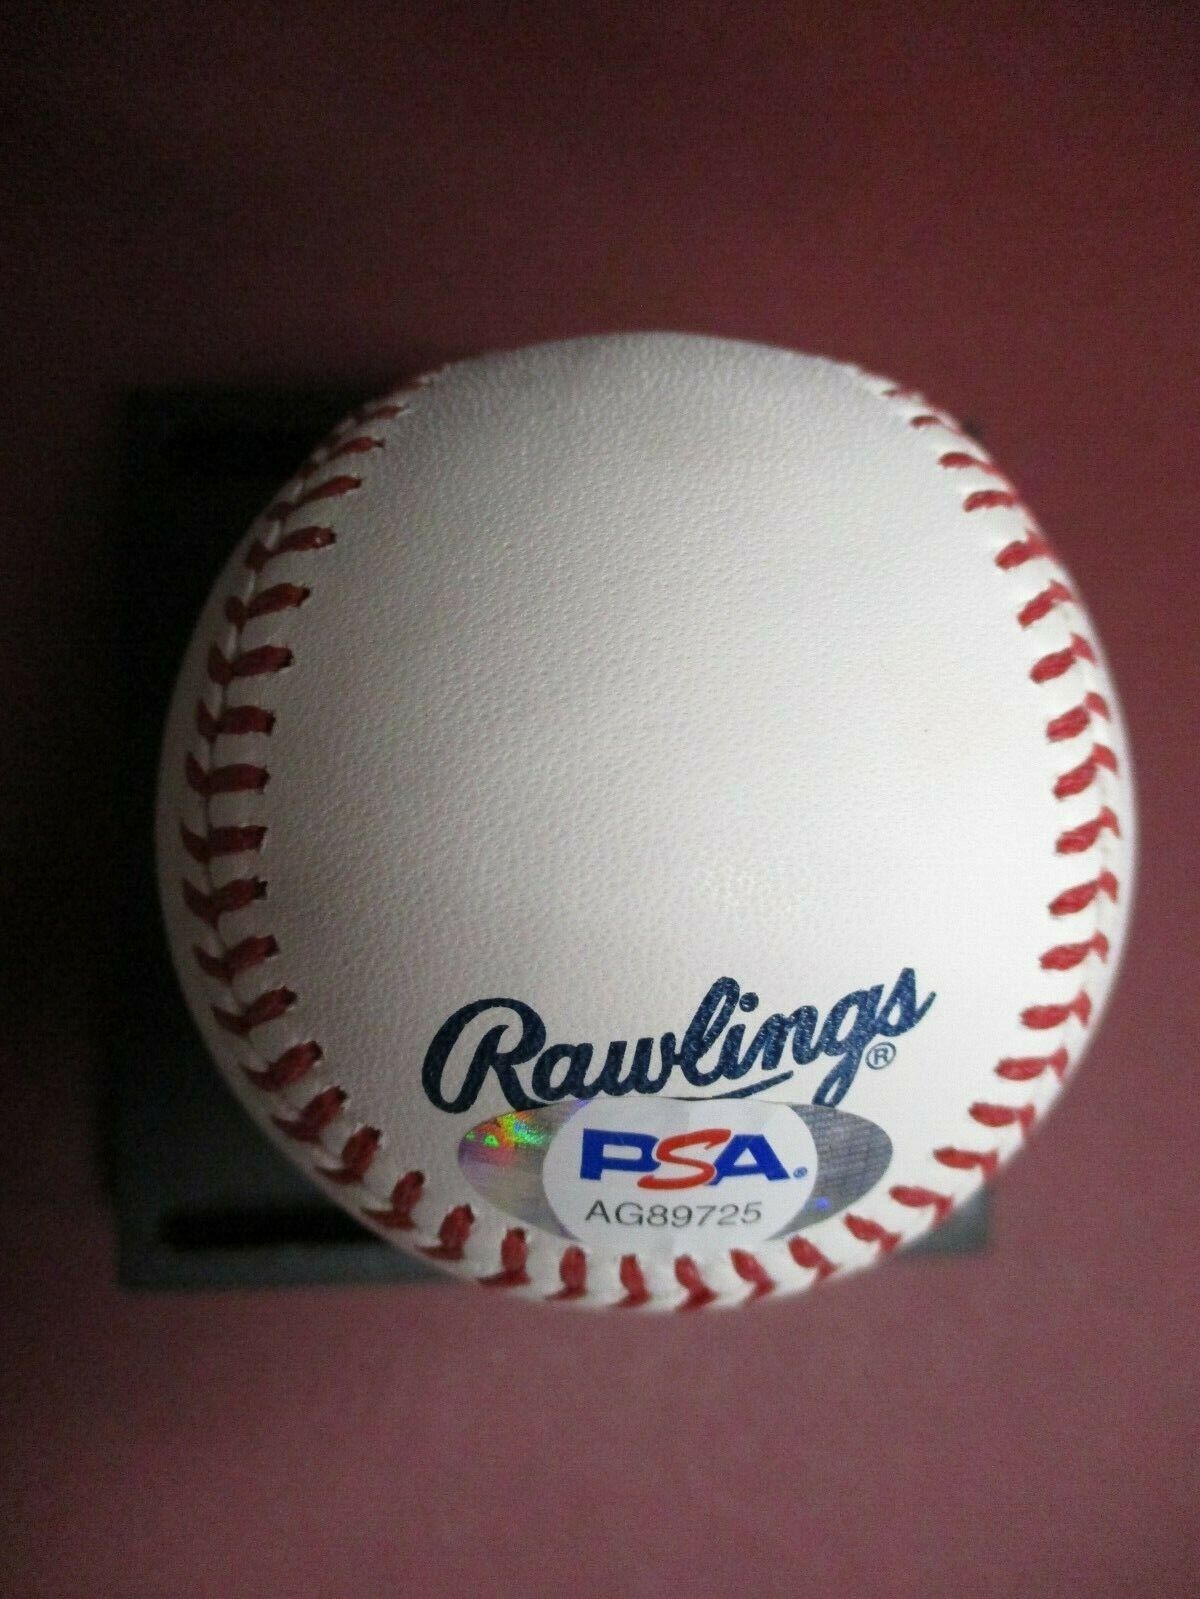 Robinson Cano NY Mets Autographed Official Ball Signed Baseball PSA COA